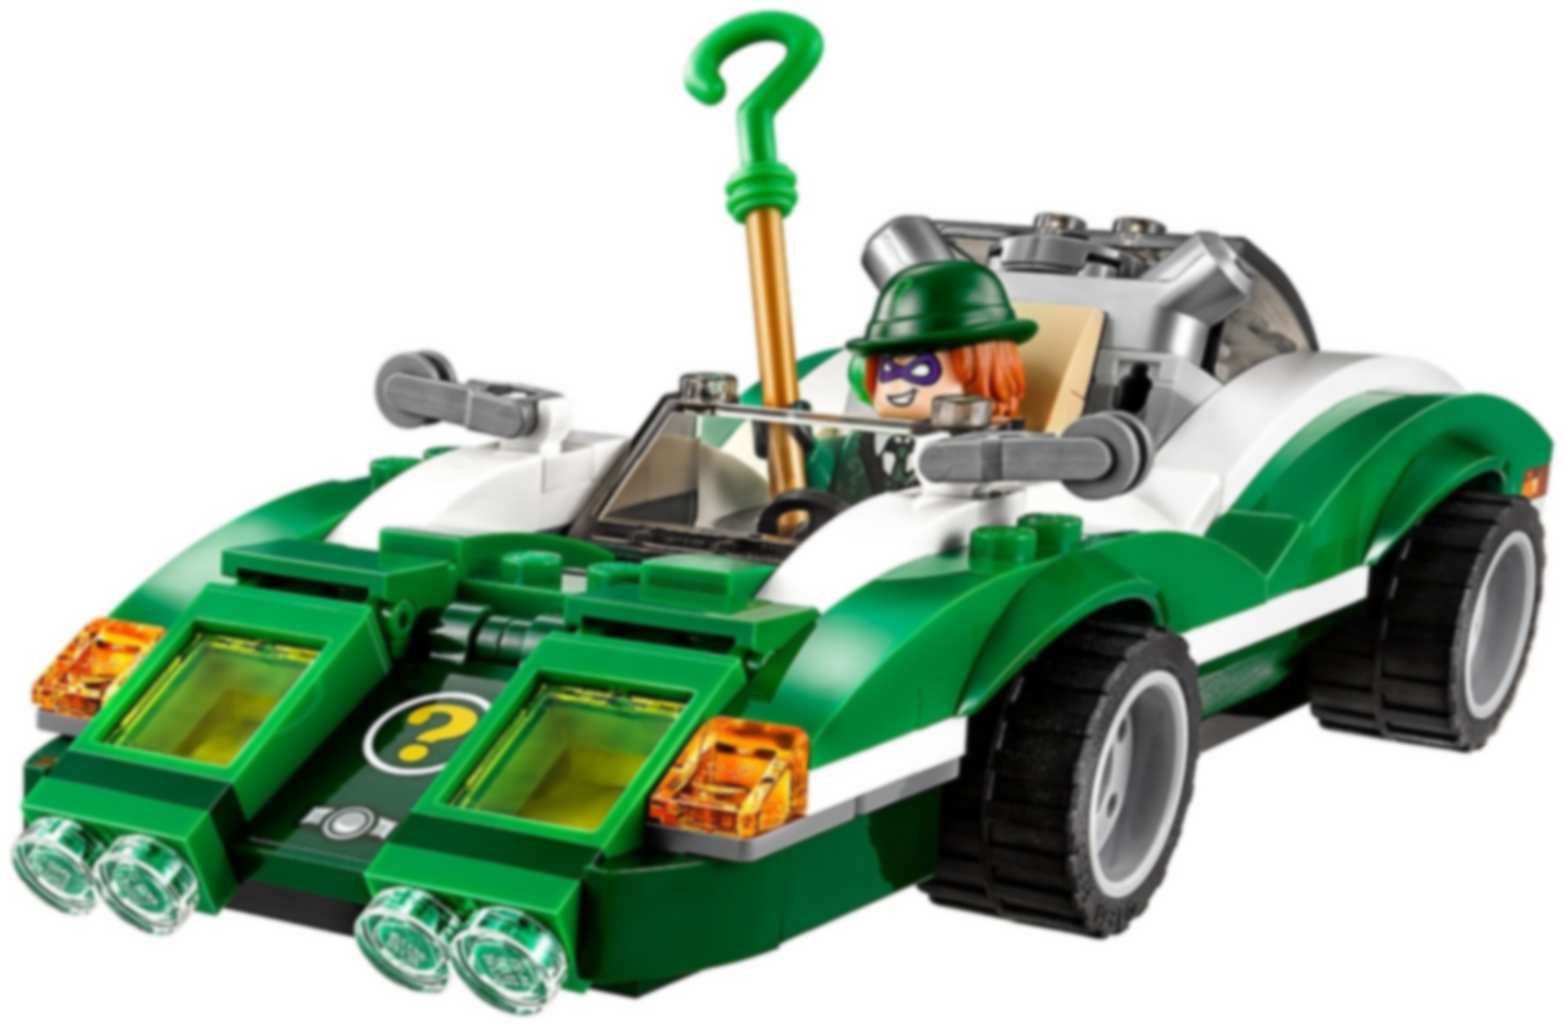 LEGO® Batman Movie The Riddler™ raadsel-racer componenten